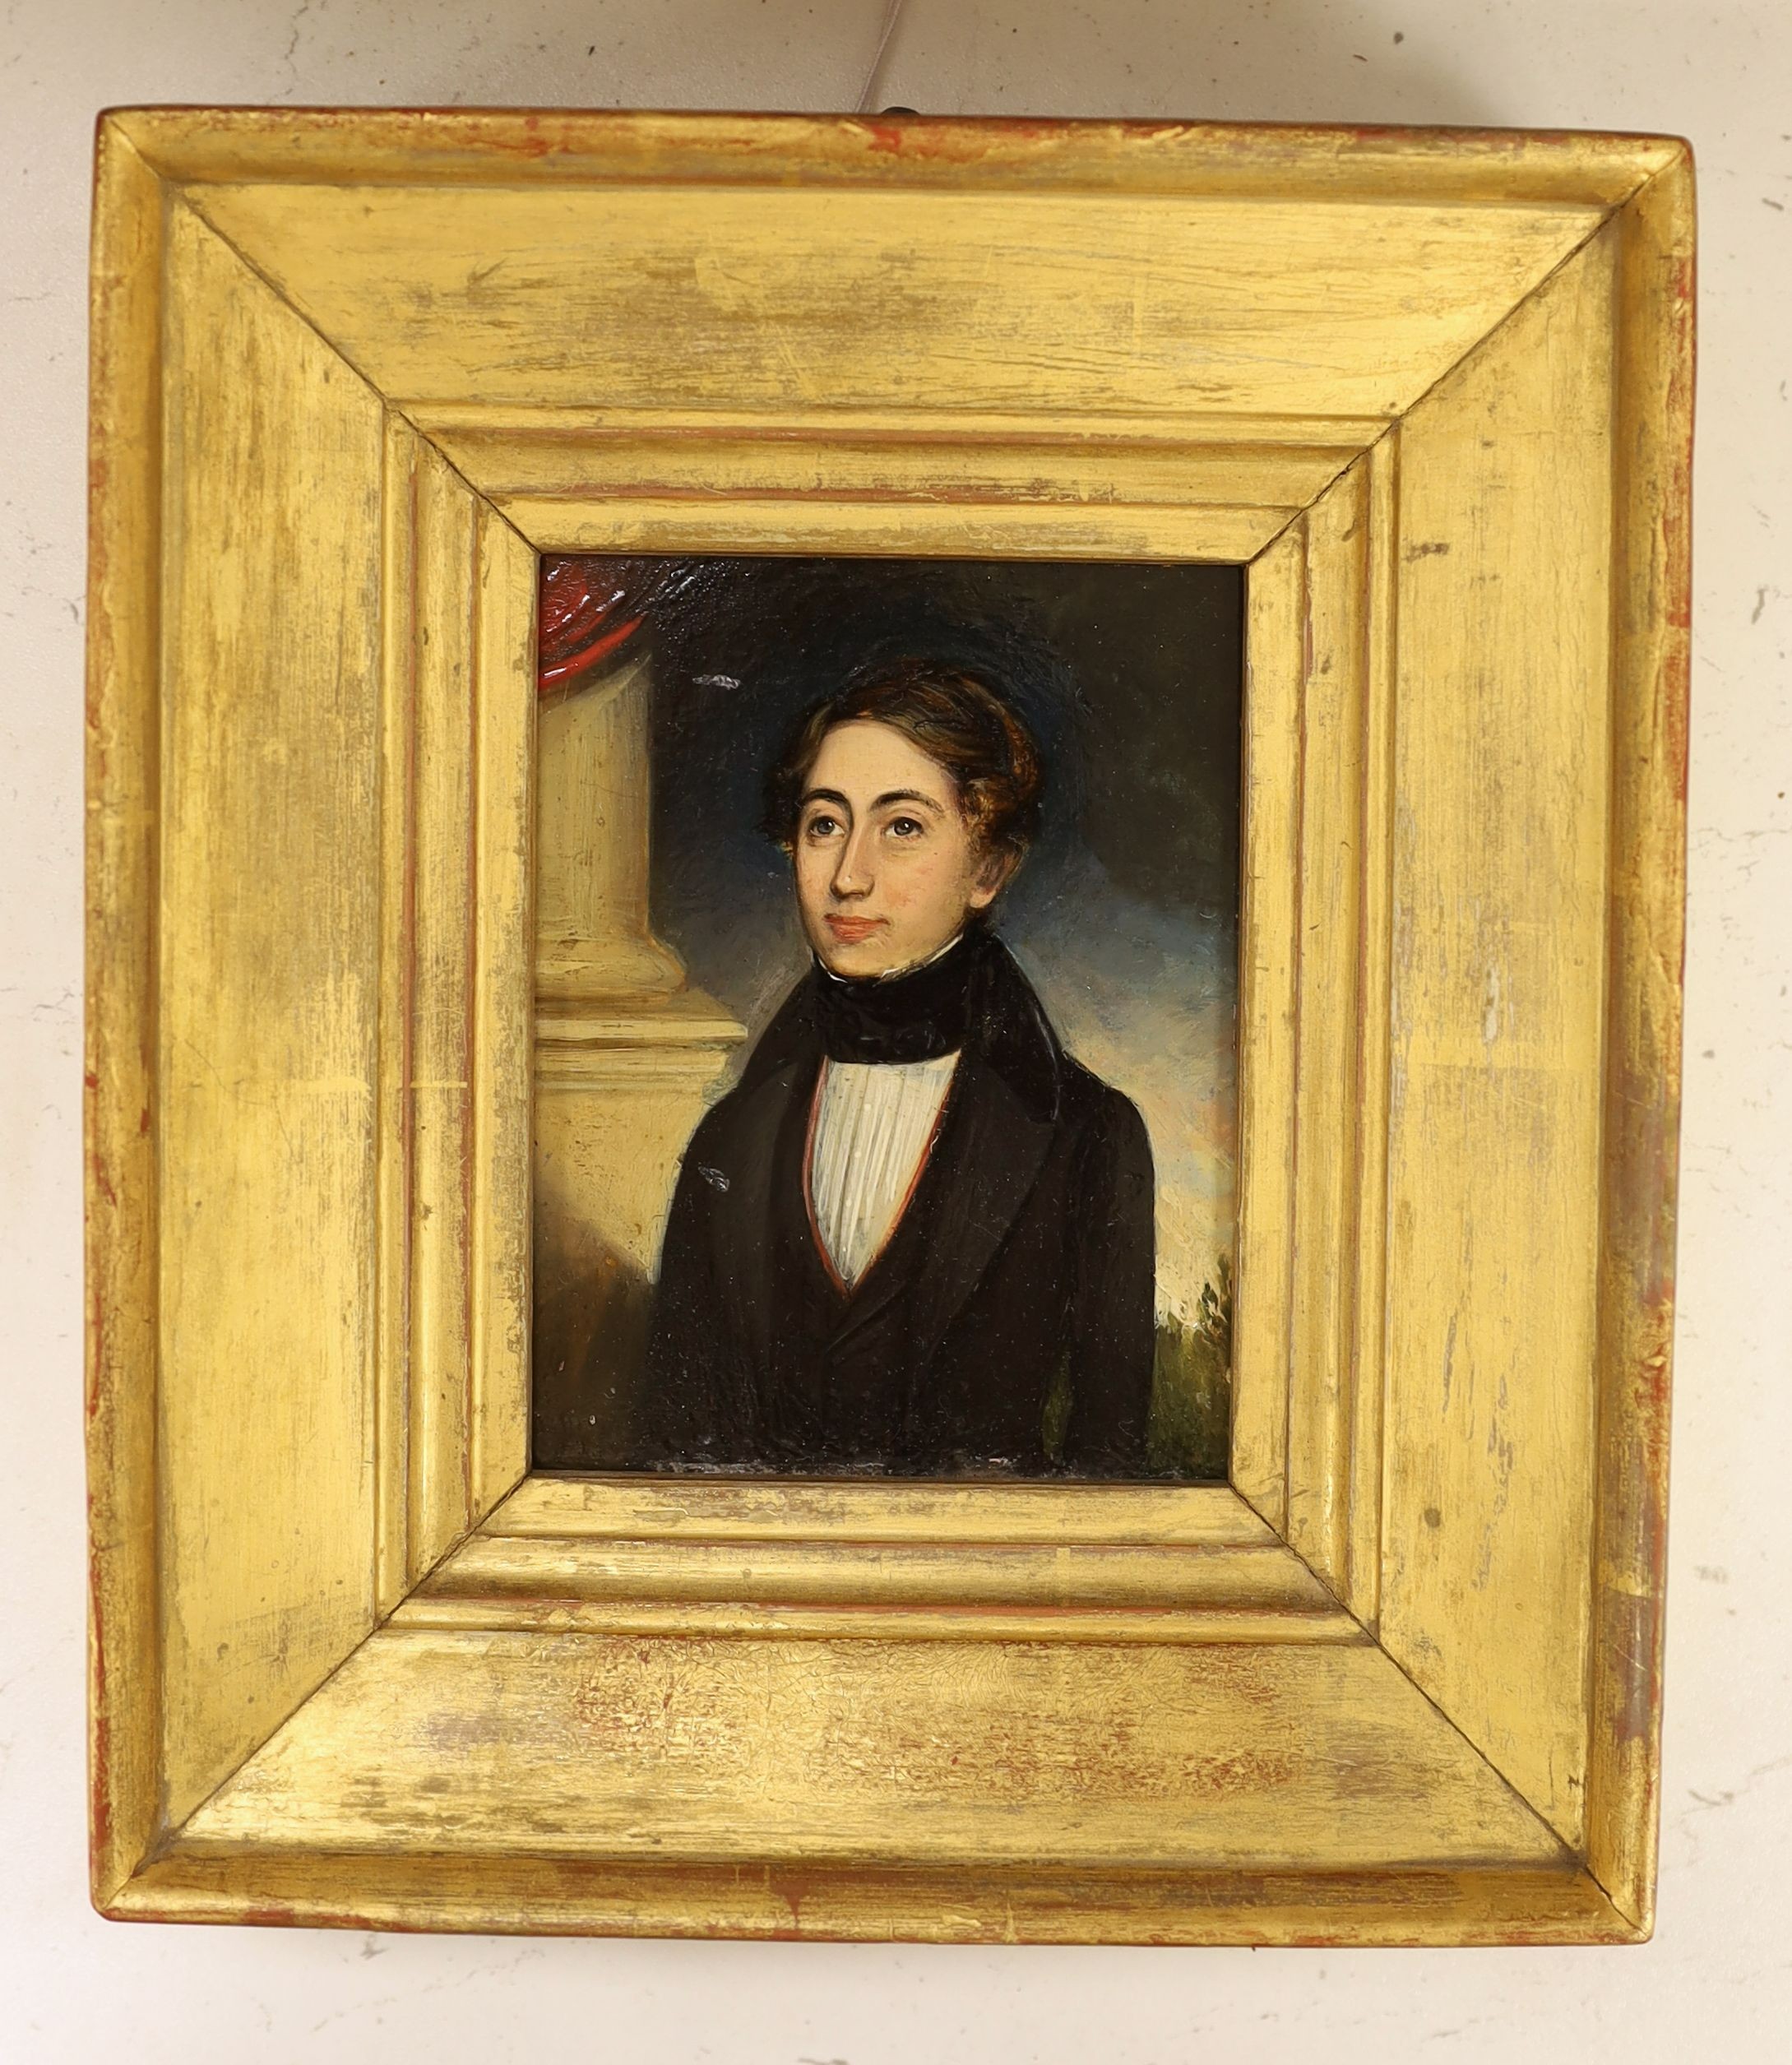 19th century English School, oil on board, Portrait miniature of a gentleman, 11 x 8.5cm